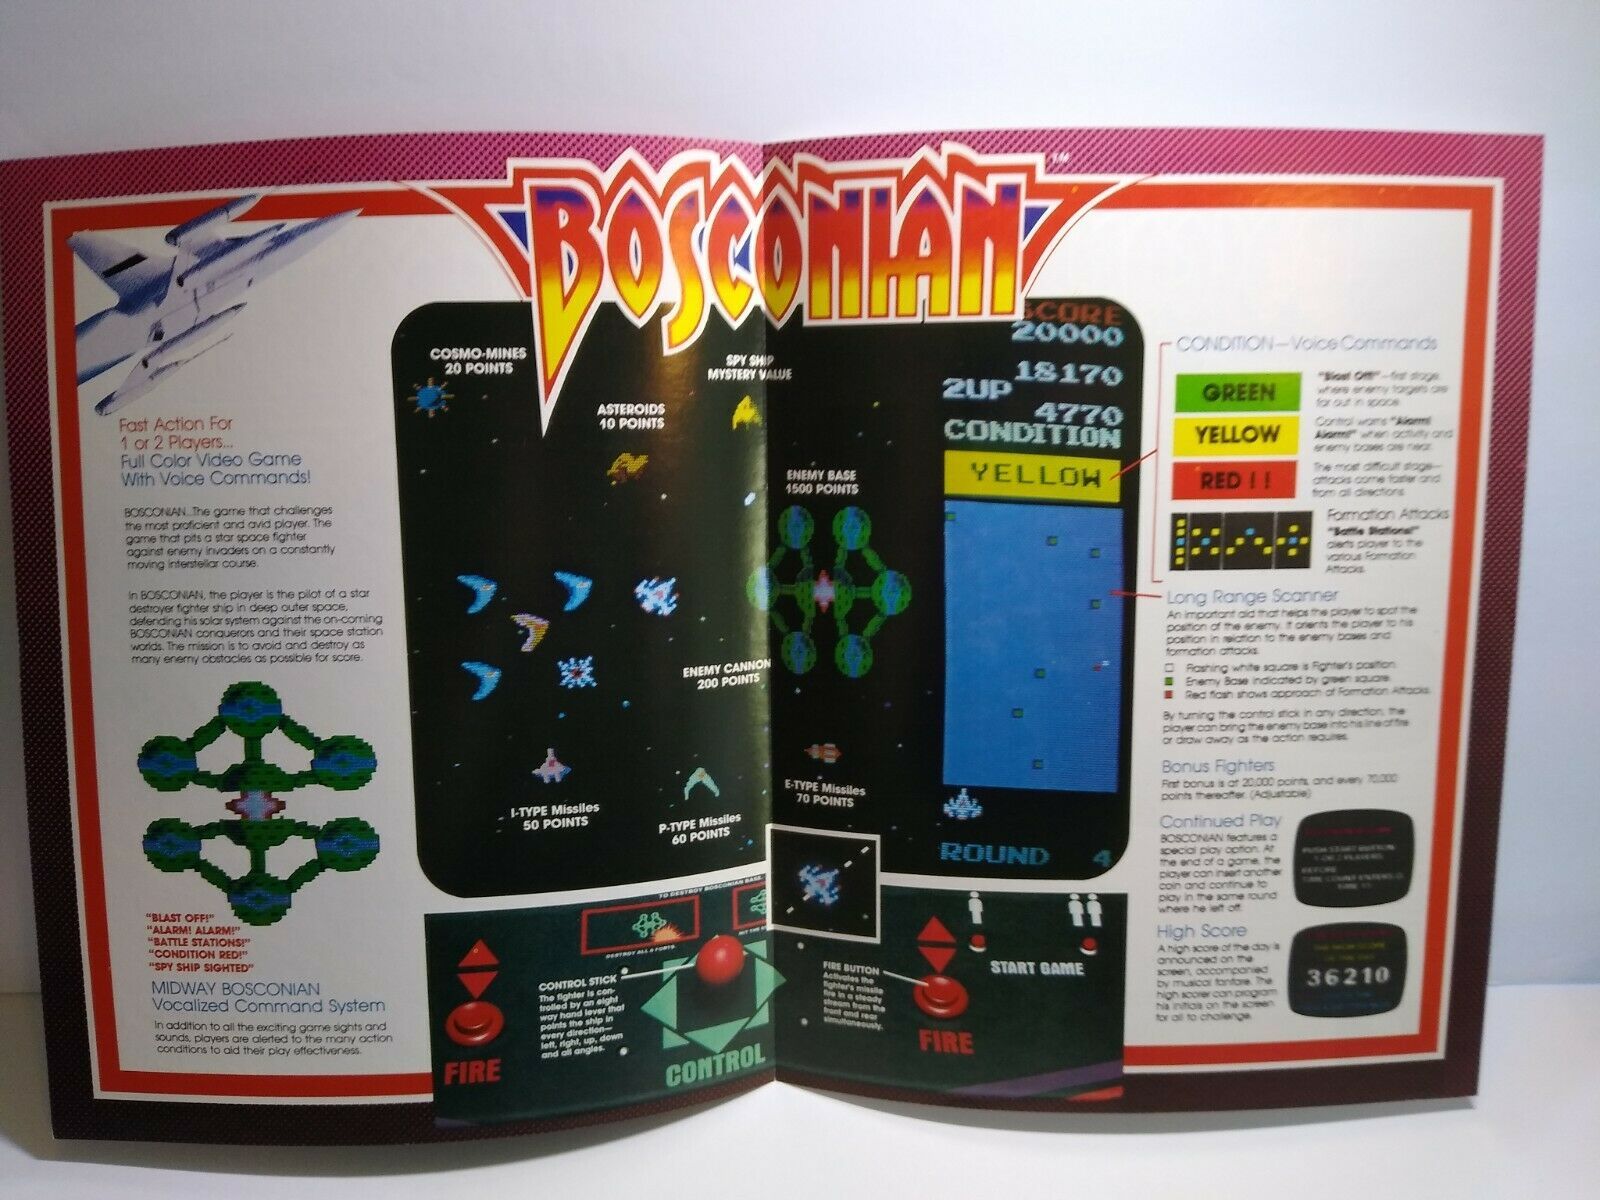 bosconian arcade game game spot online